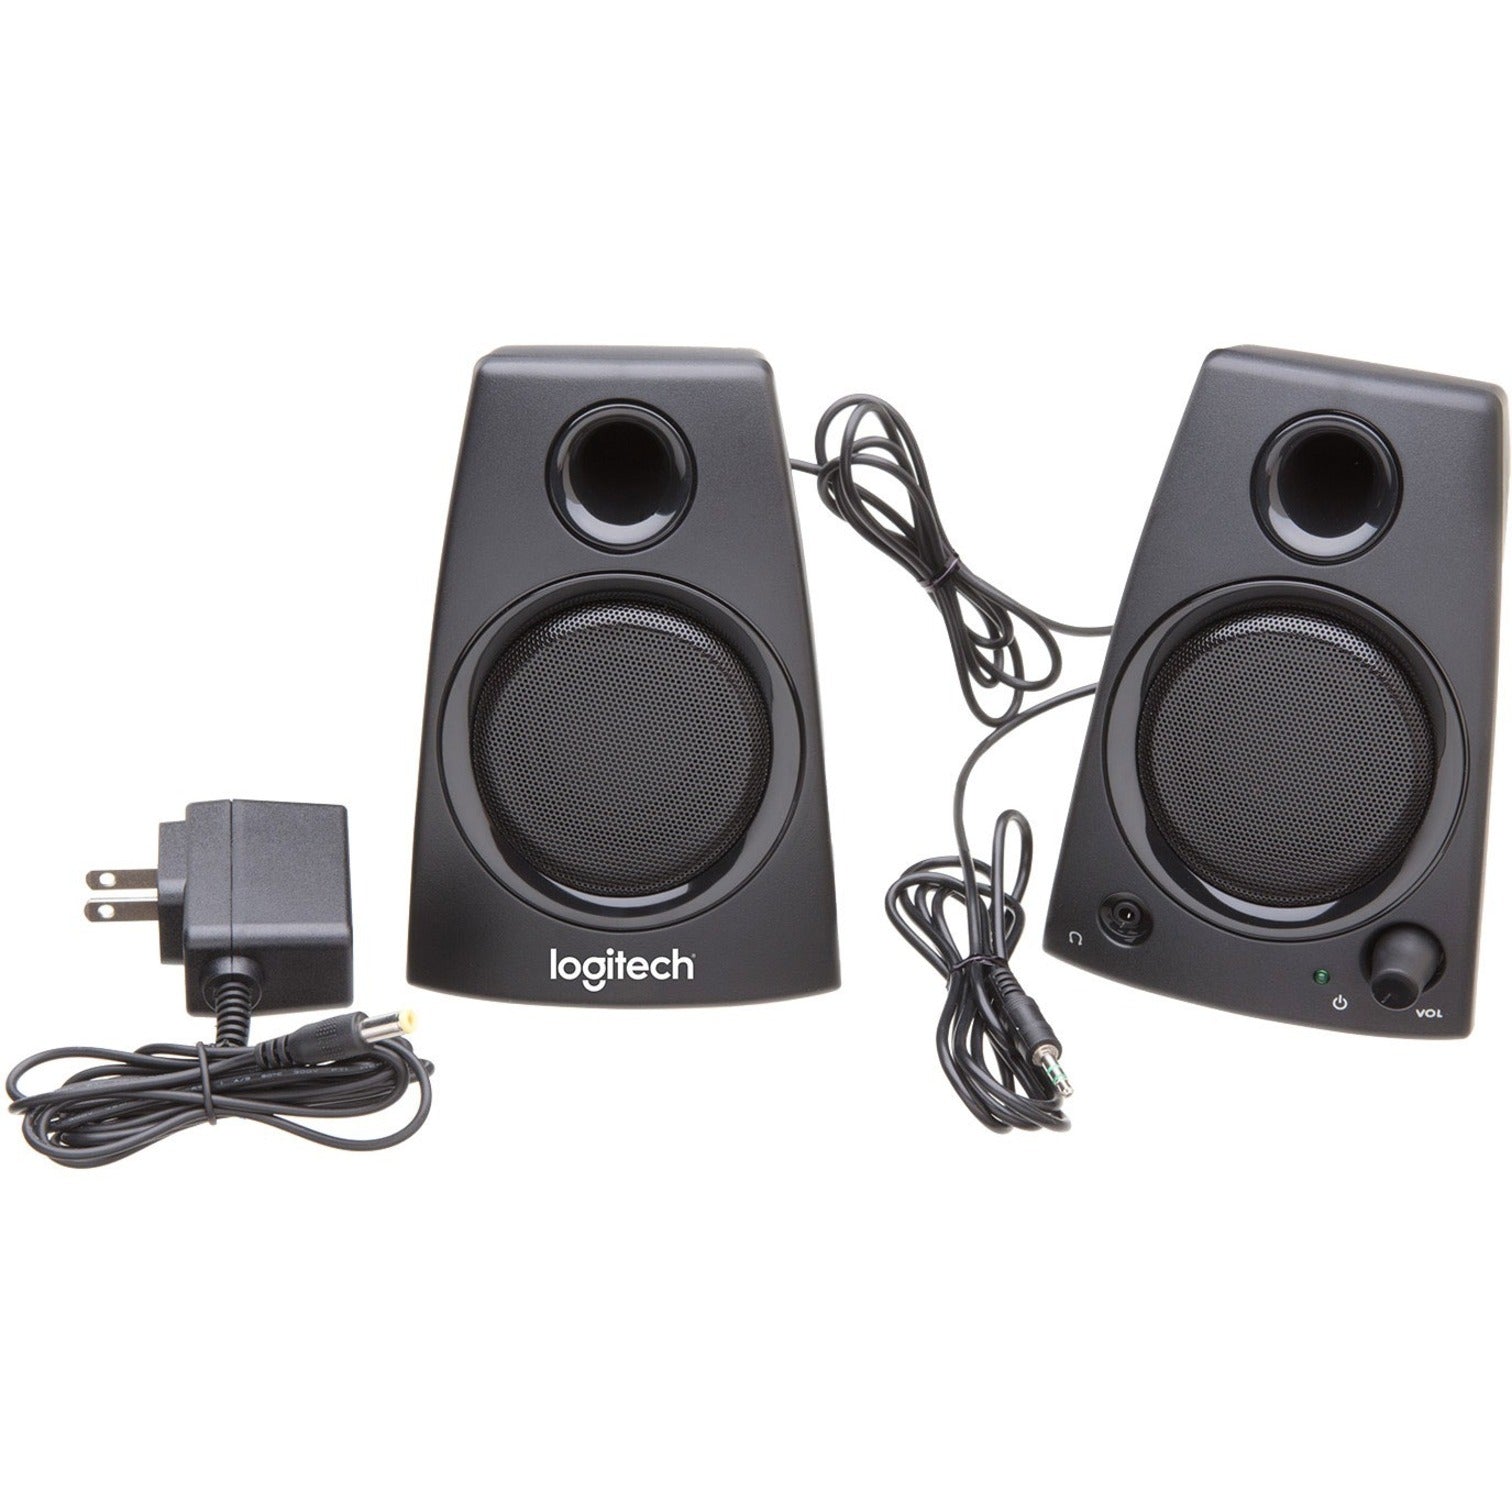 Logitech 980-000417 Z130 Compact Speakers, 2.0 Speaker System - 5W RMS, Black